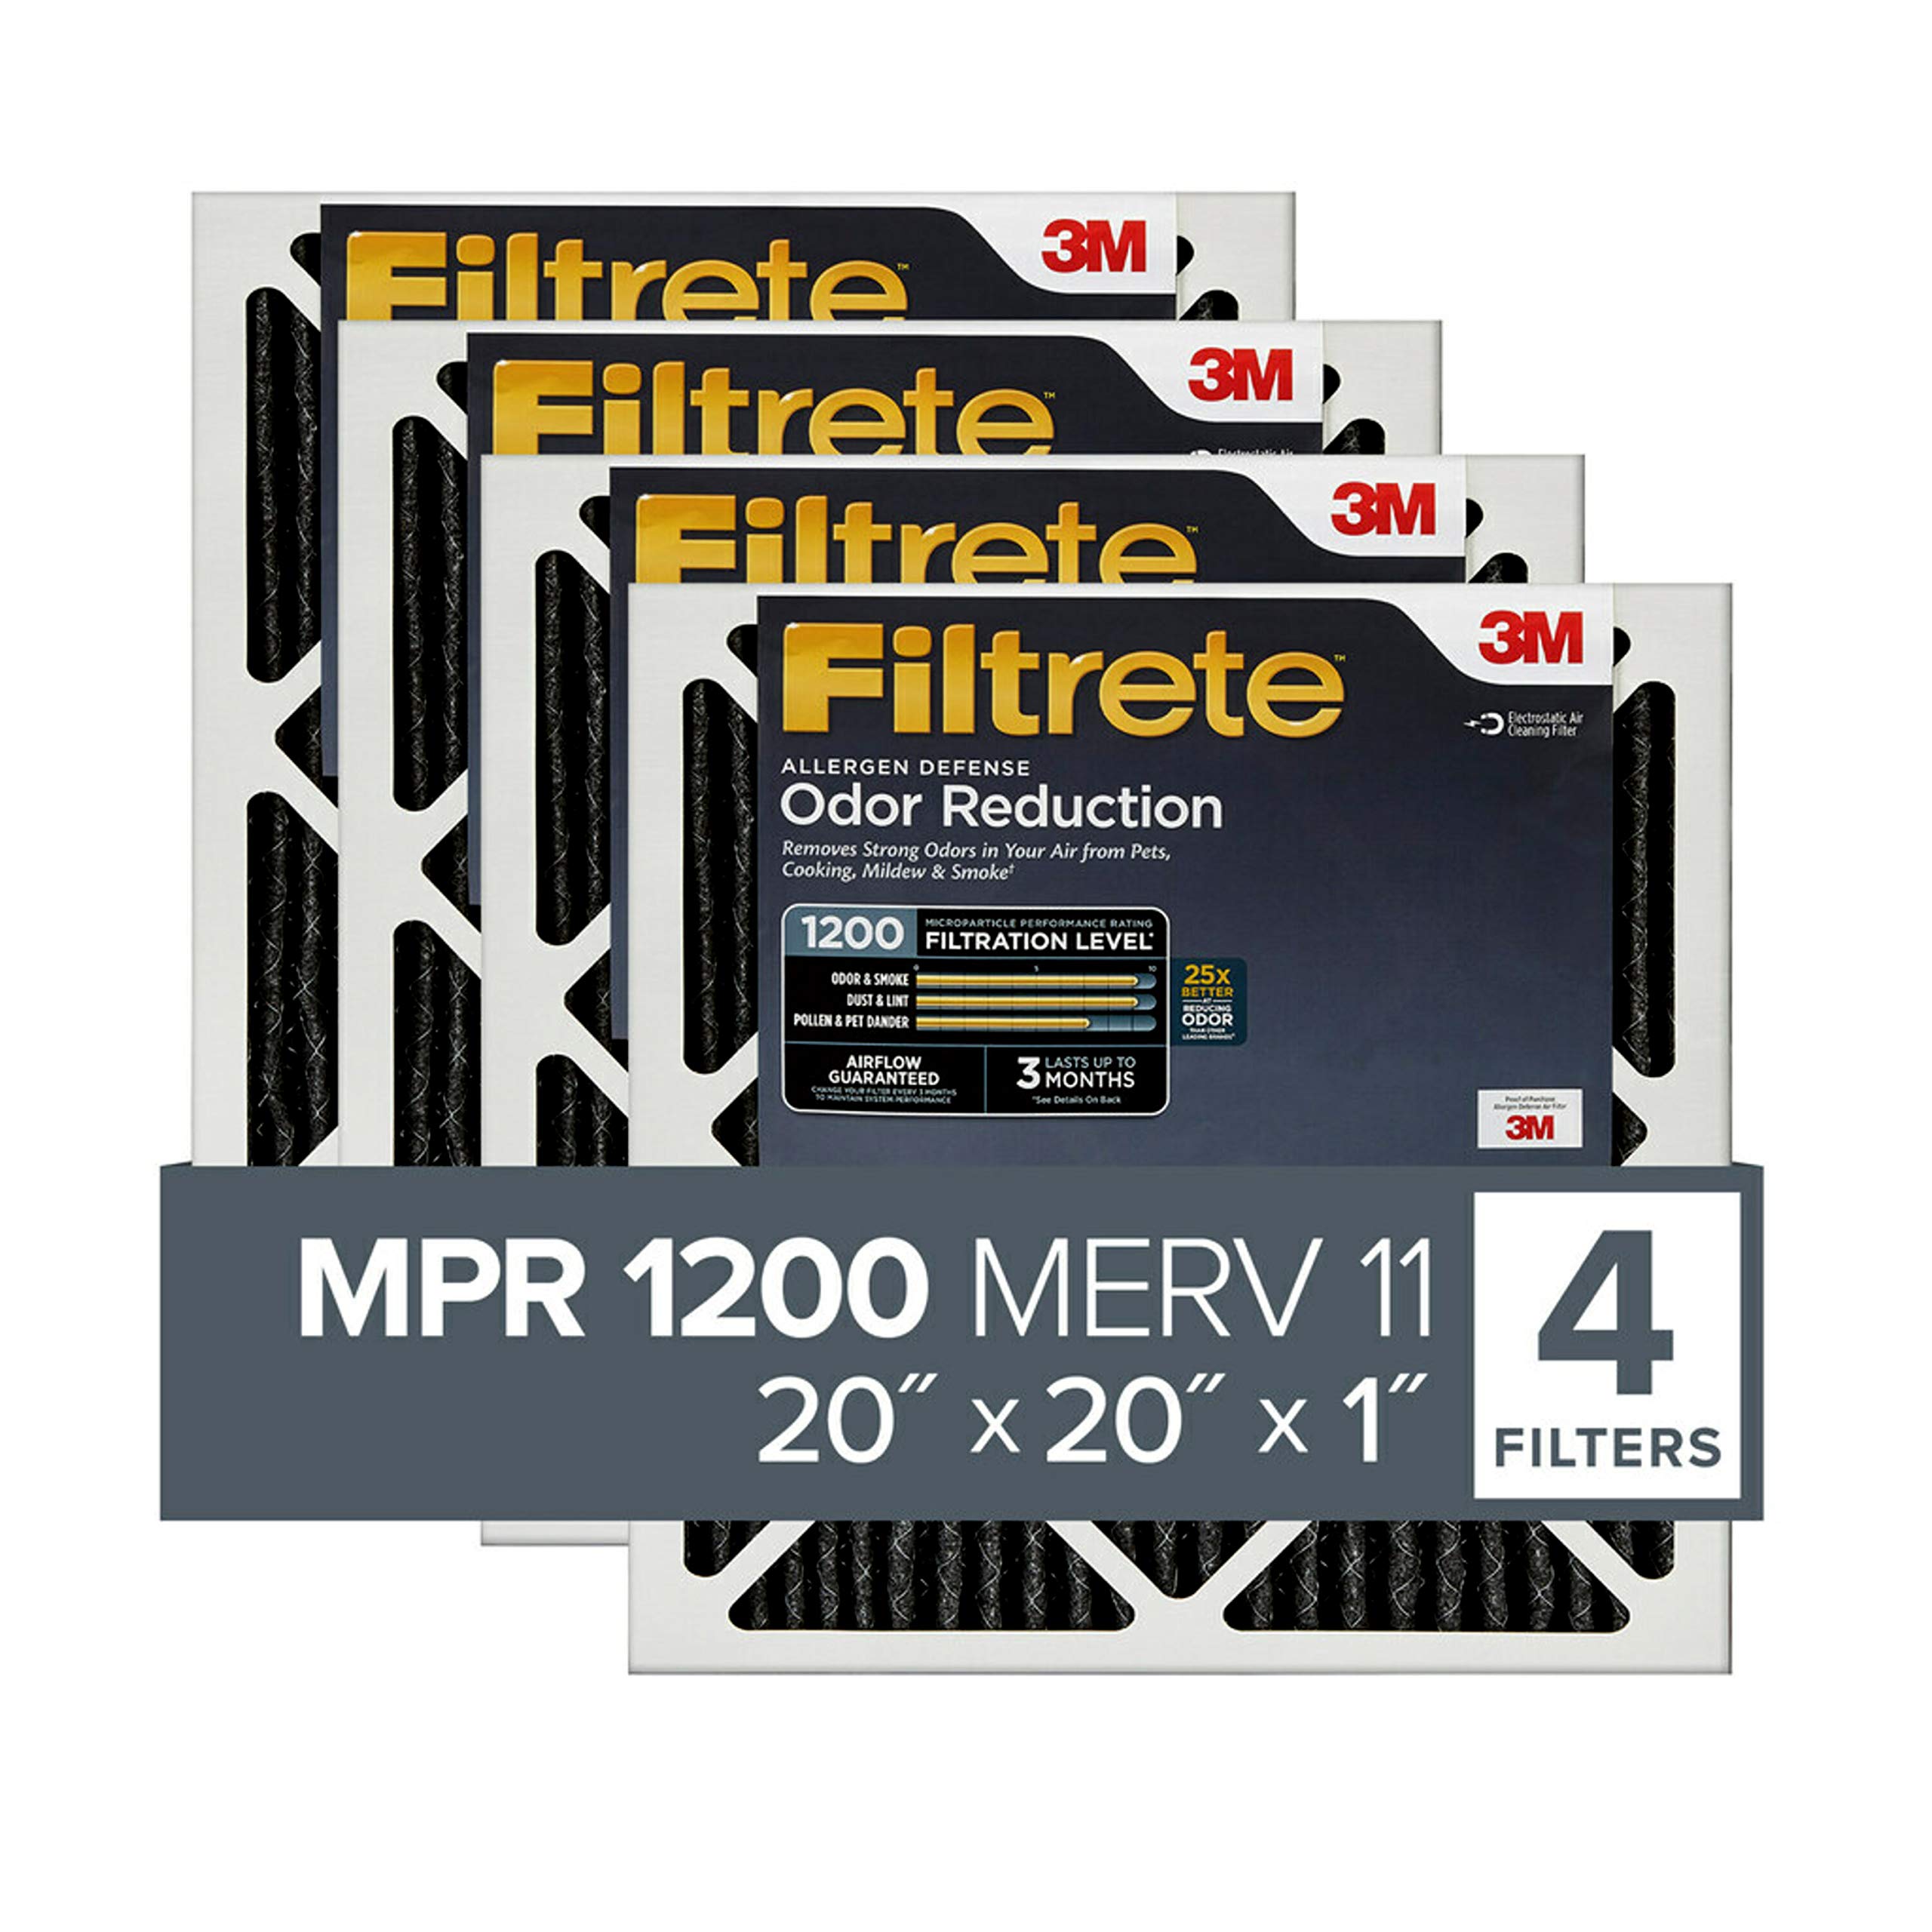 Filtrete 20x20x1 Air Filter MPR 1200 MERV 11, Allergen Defense Odor Reduction, 4-Pack (exact dimensions 19.69x19.69x0.81)